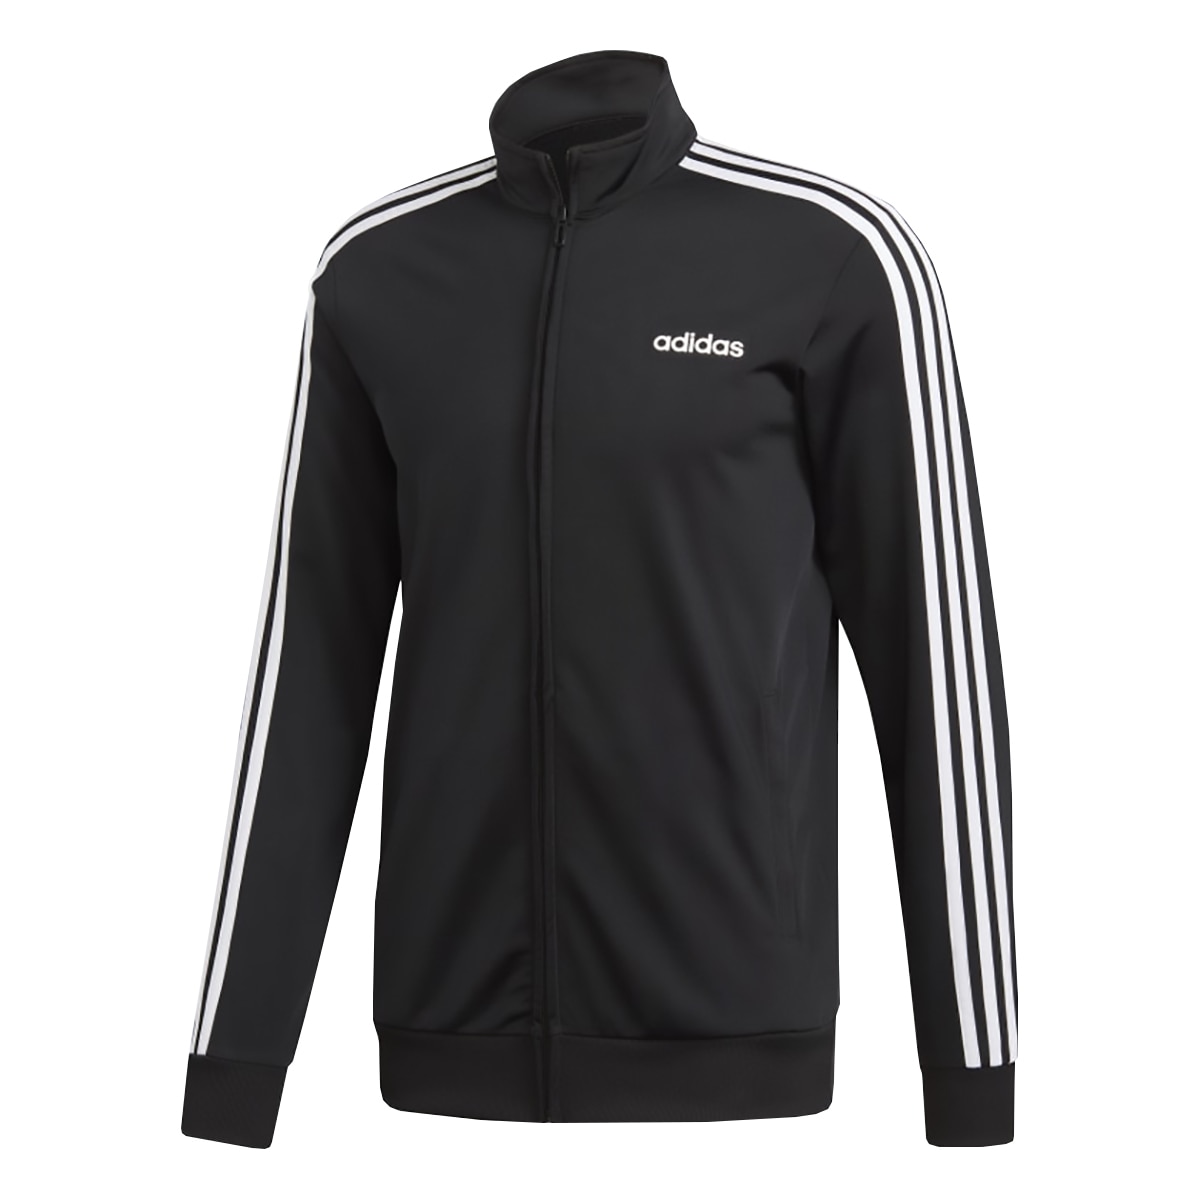 Adidas Essentials 3 Stripe Men's Track Jacket DQ3070 - Black, White - image 1 of 8